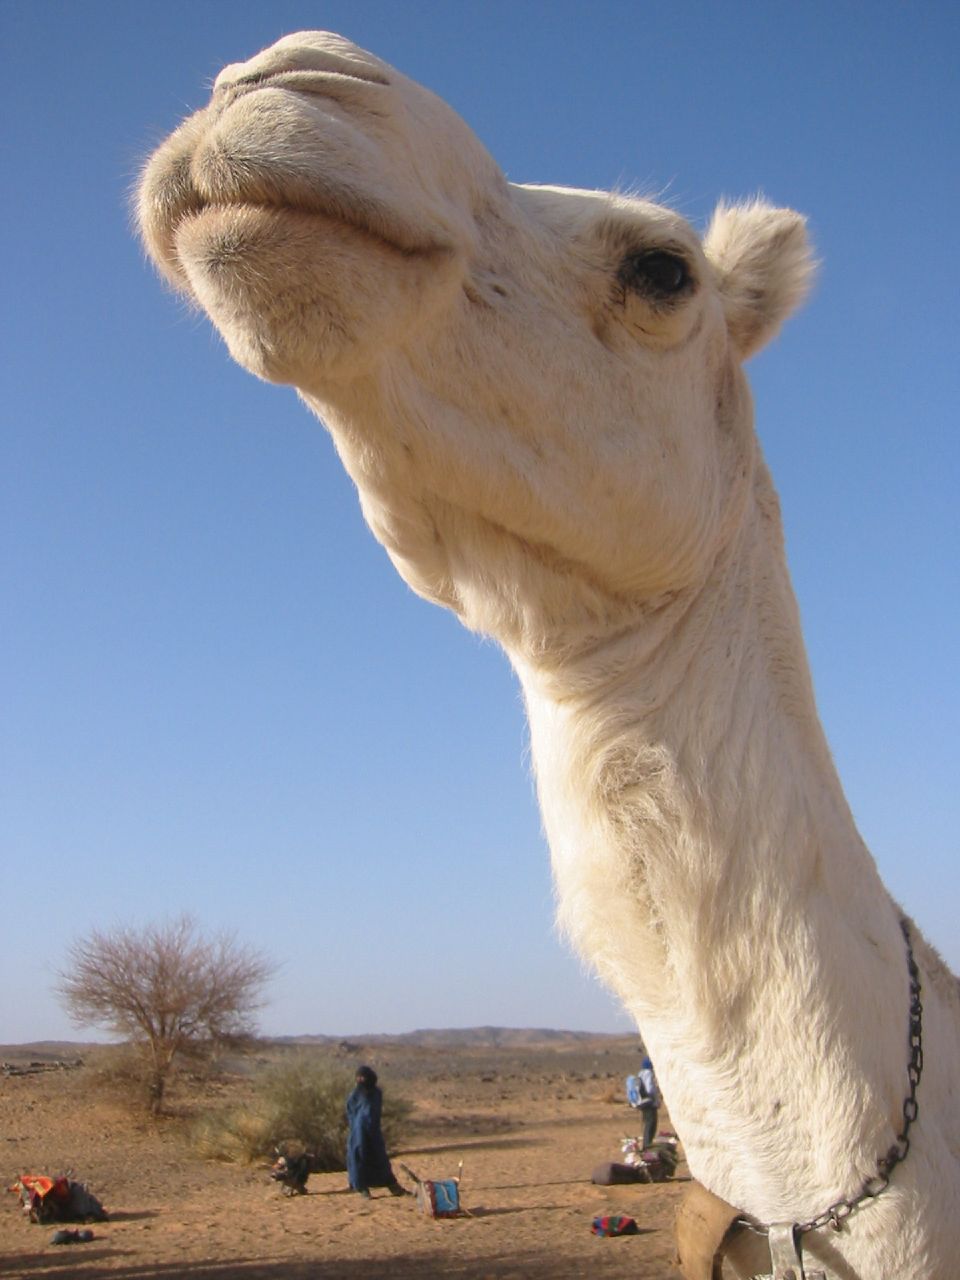 the face of a camel on a desert landscape